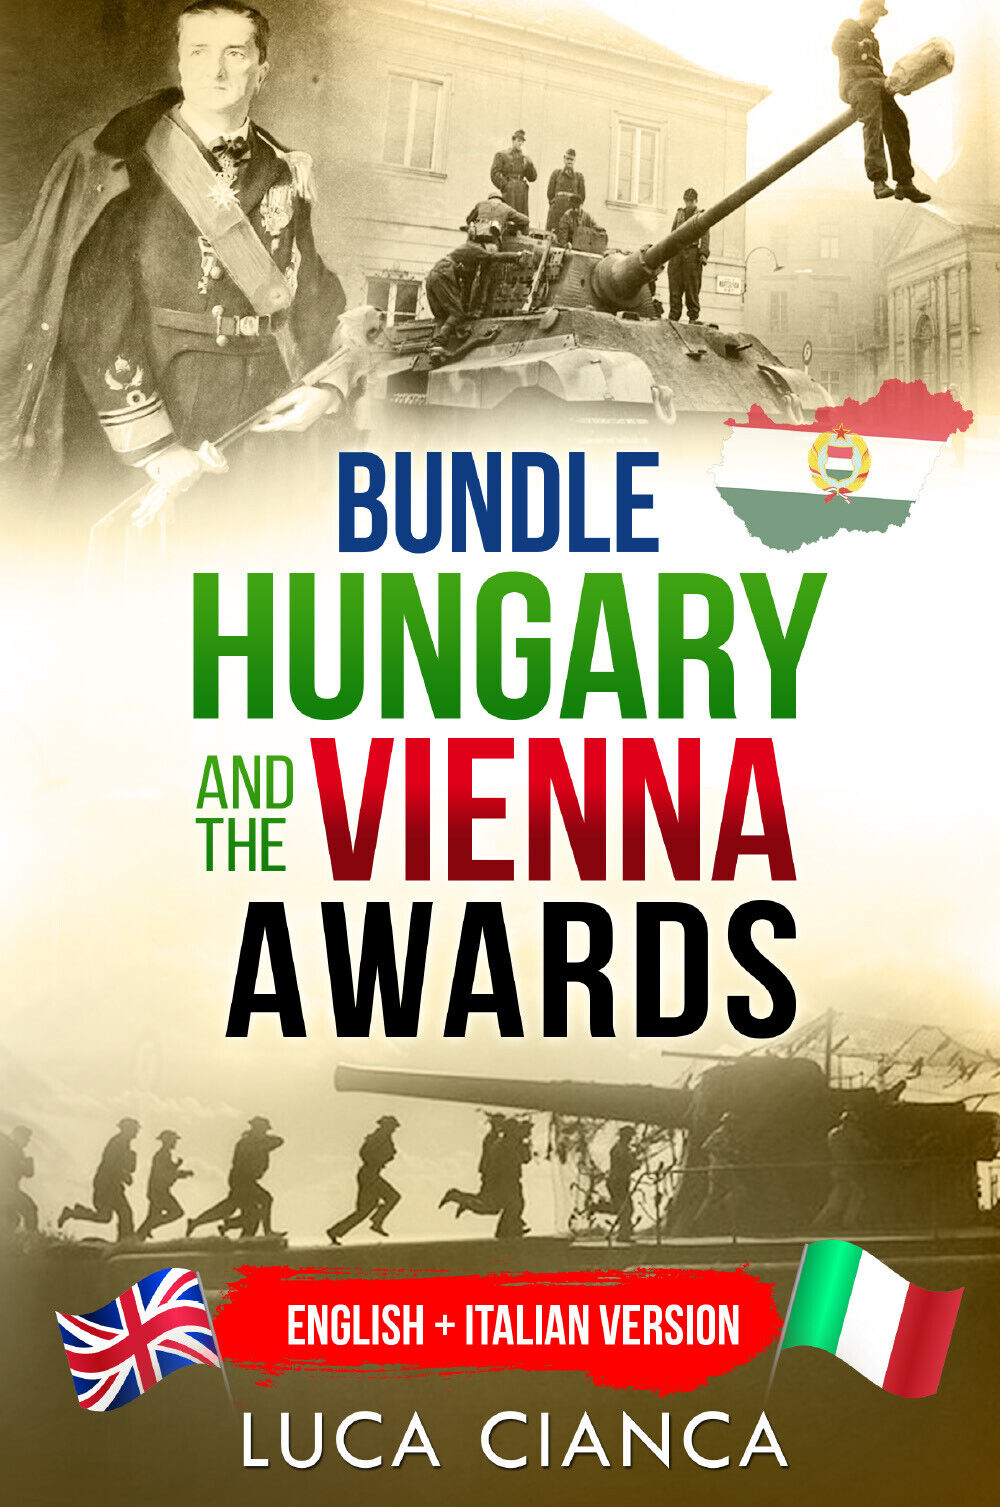 Bundle hungary and the Vienna awards. English + Italian version di Luca Cianca, 